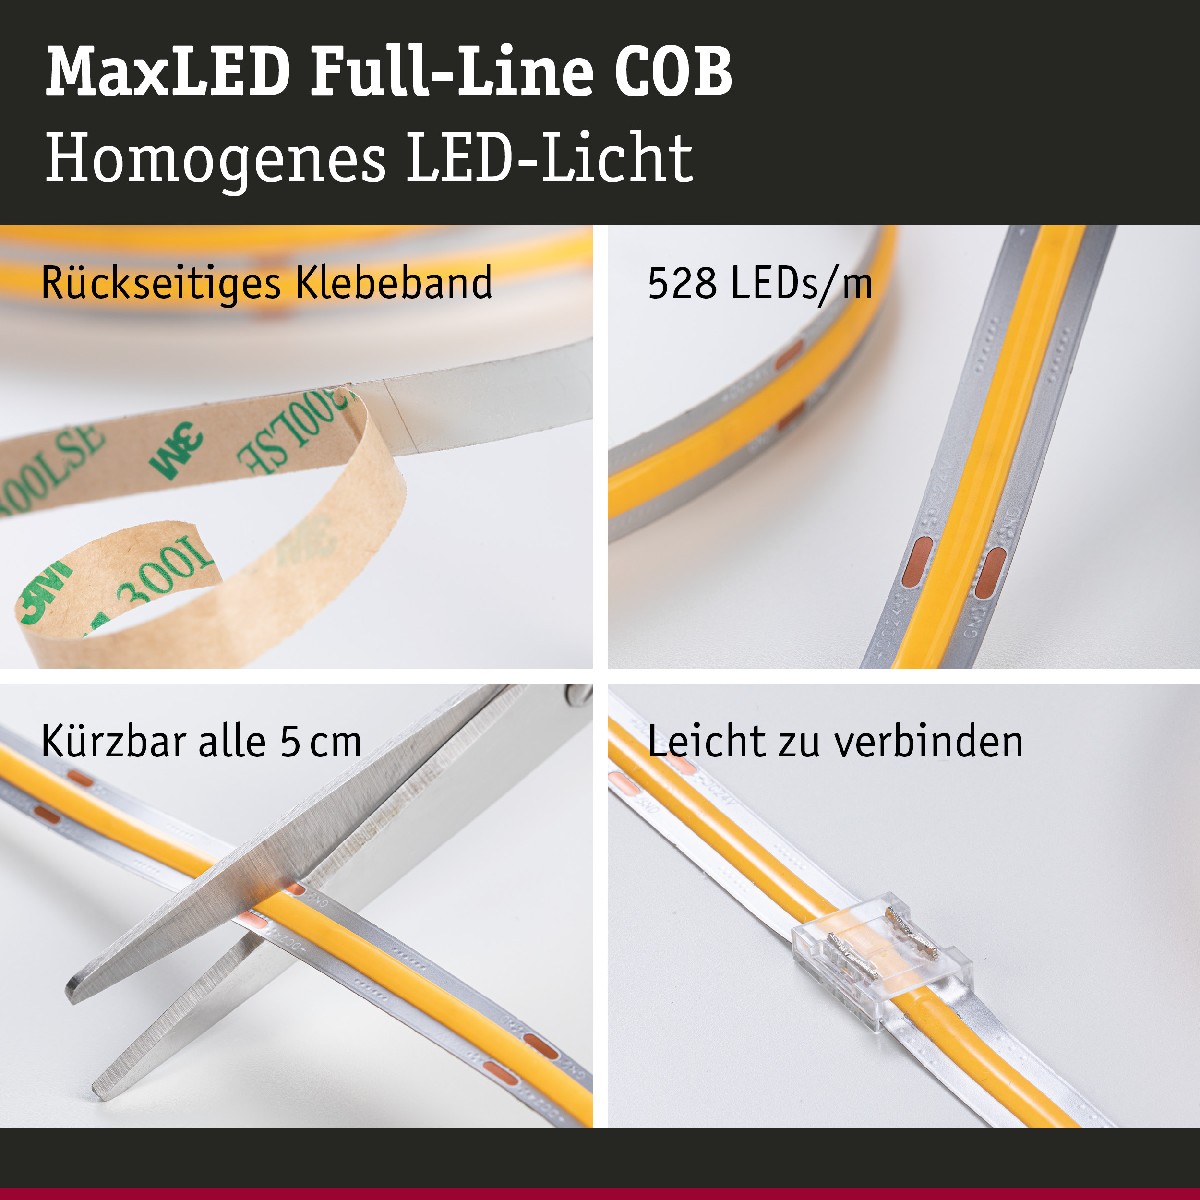 COB LED-Streifen ohne sichtbare Einzel-LEDs